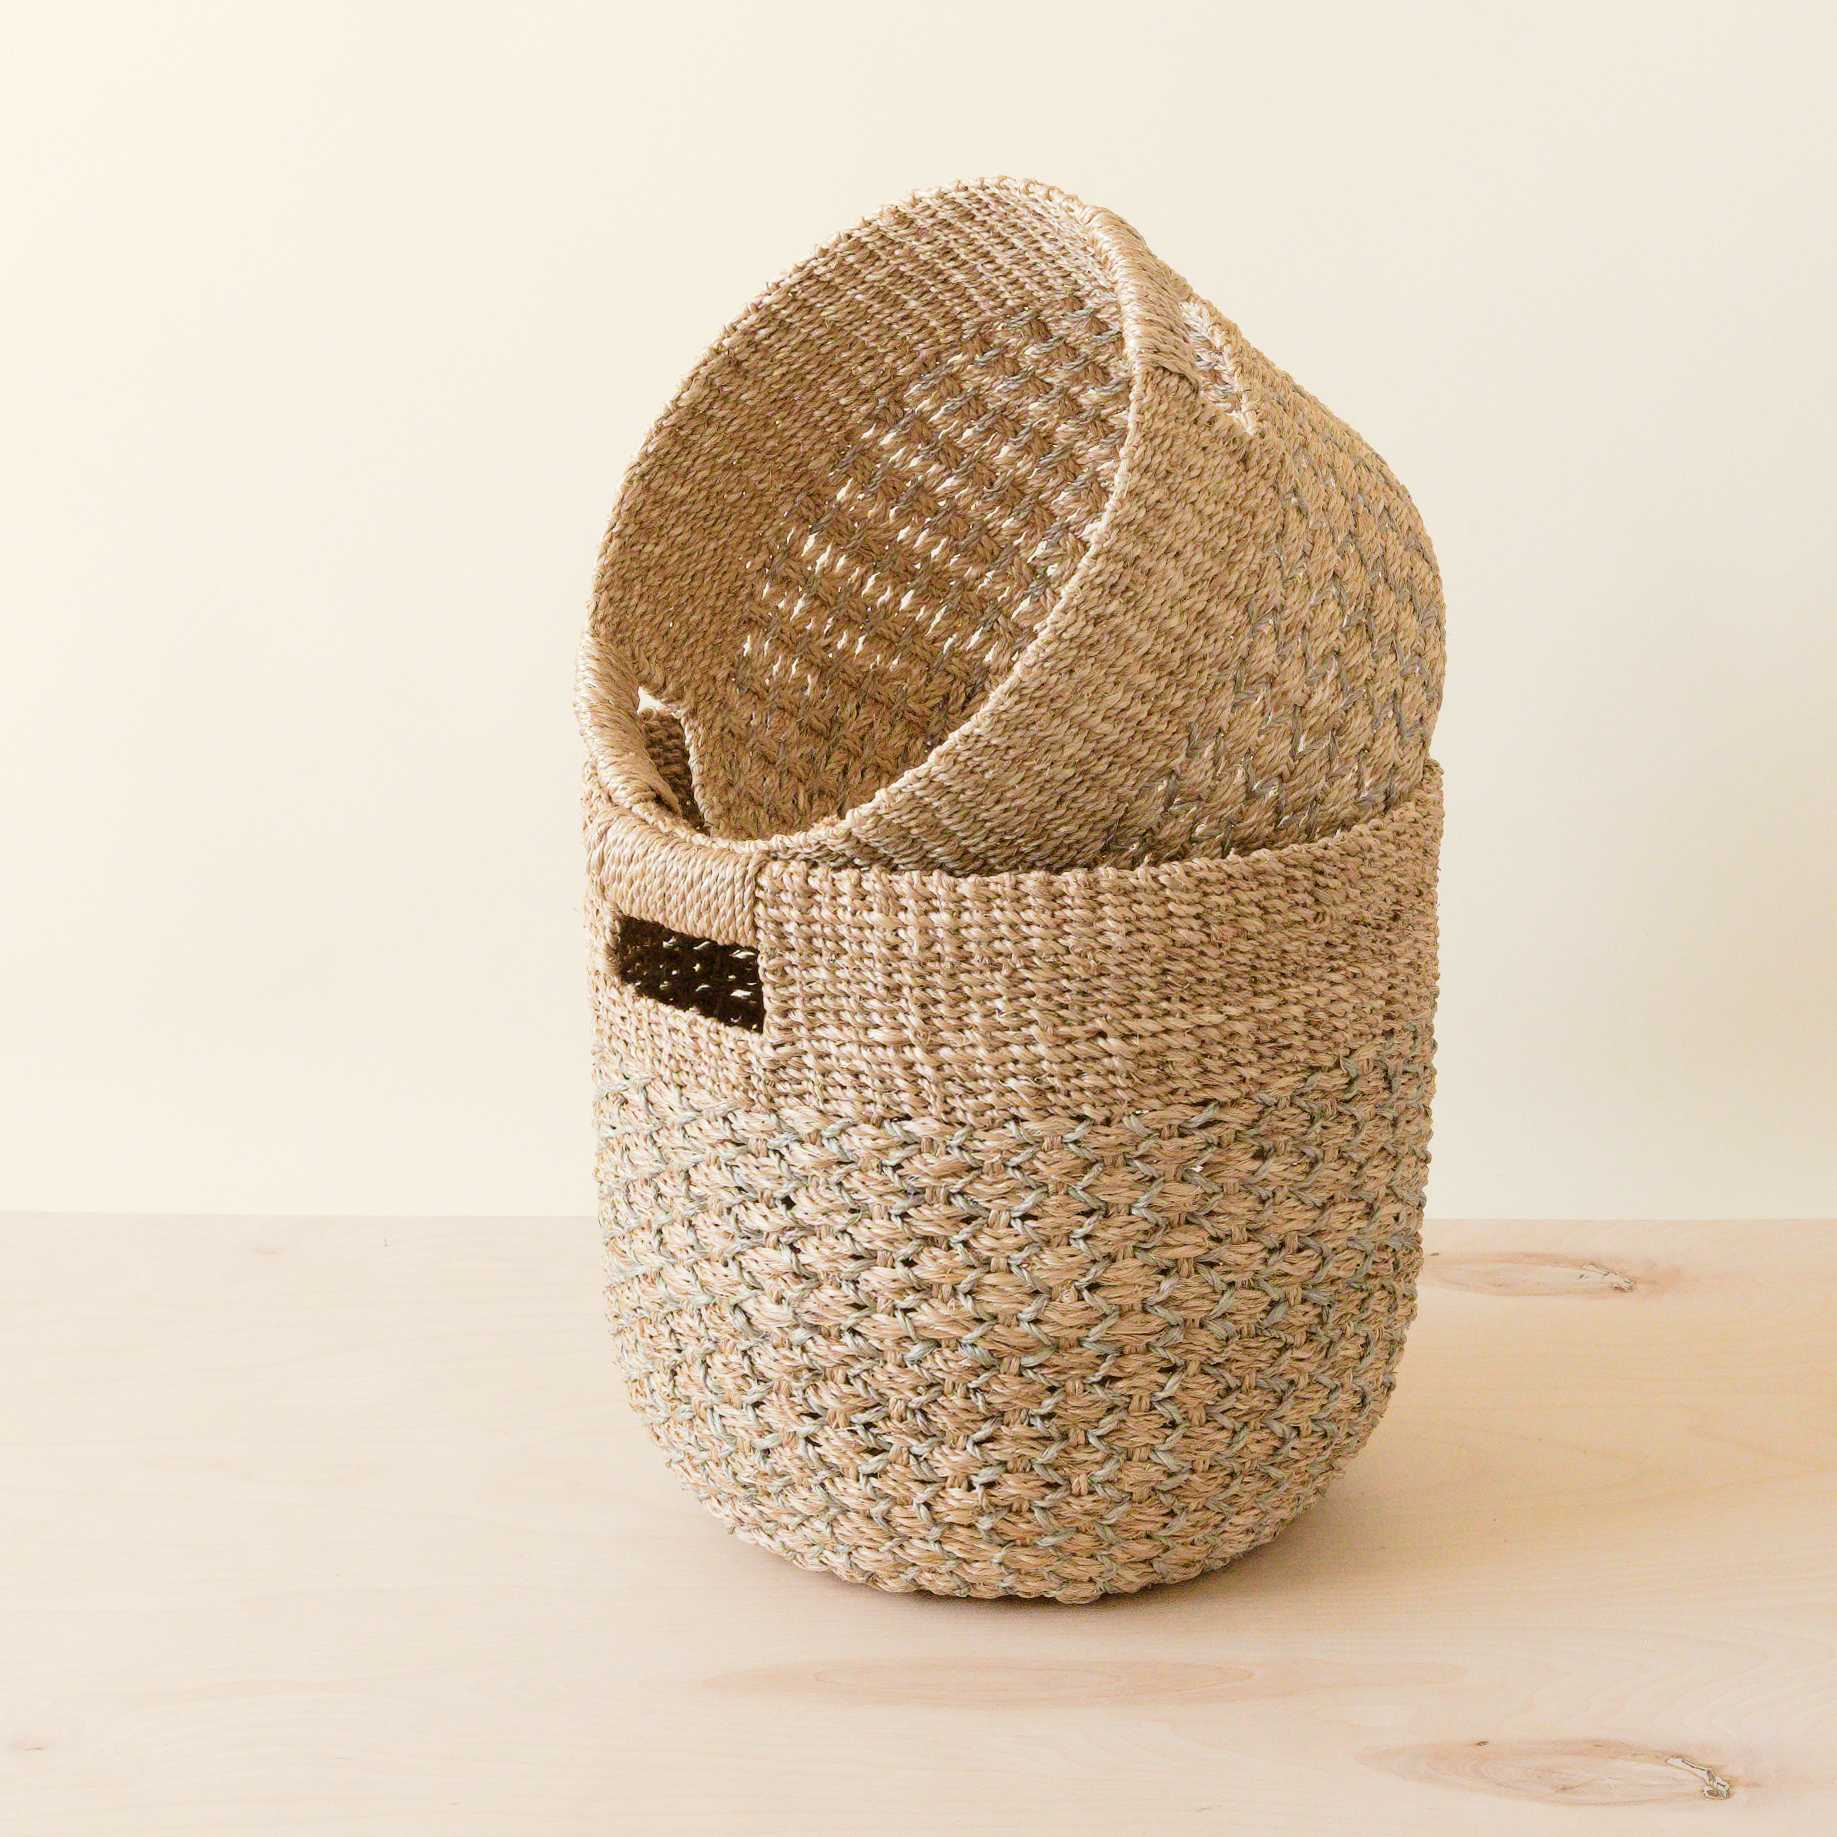 - Grey + Natural Round Bottom Baskets, set of 2 - Woven Baskets | LIKHA - LIKHÂ